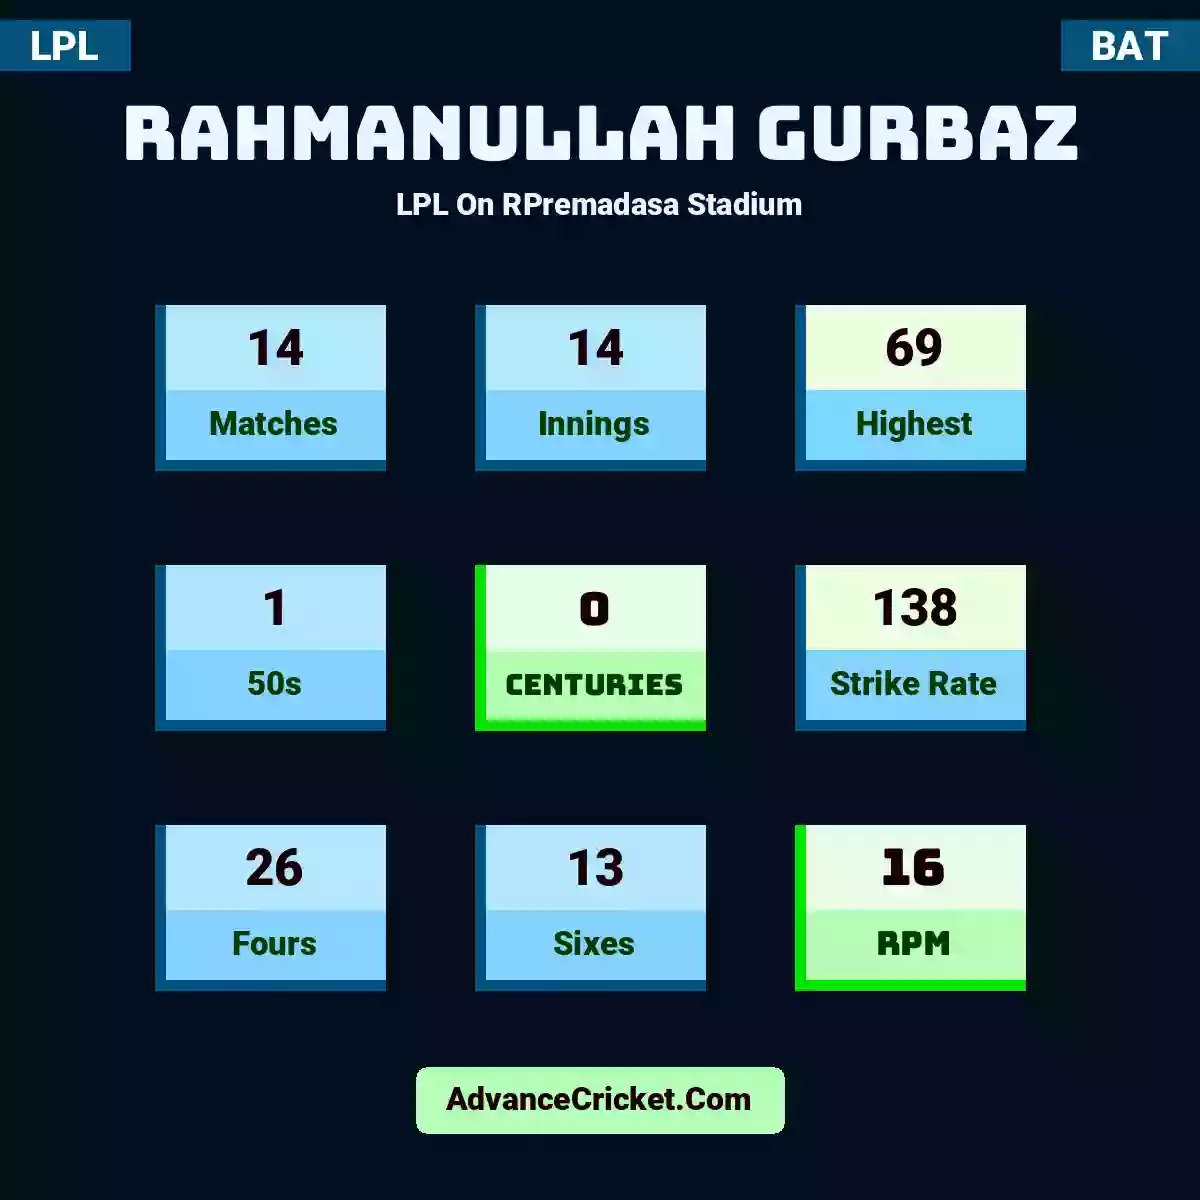 Rahmanullah Gurbaz LPL  On RPremadasa Stadium, Rahmanullah Gurbaz played 14 matches, scored 69 runs as highest, 1 half-centuries, and 0 centuries, with a strike rate of 138. R.Gurbaz hit 26 fours and 13 sixes, with an RPM of 16.